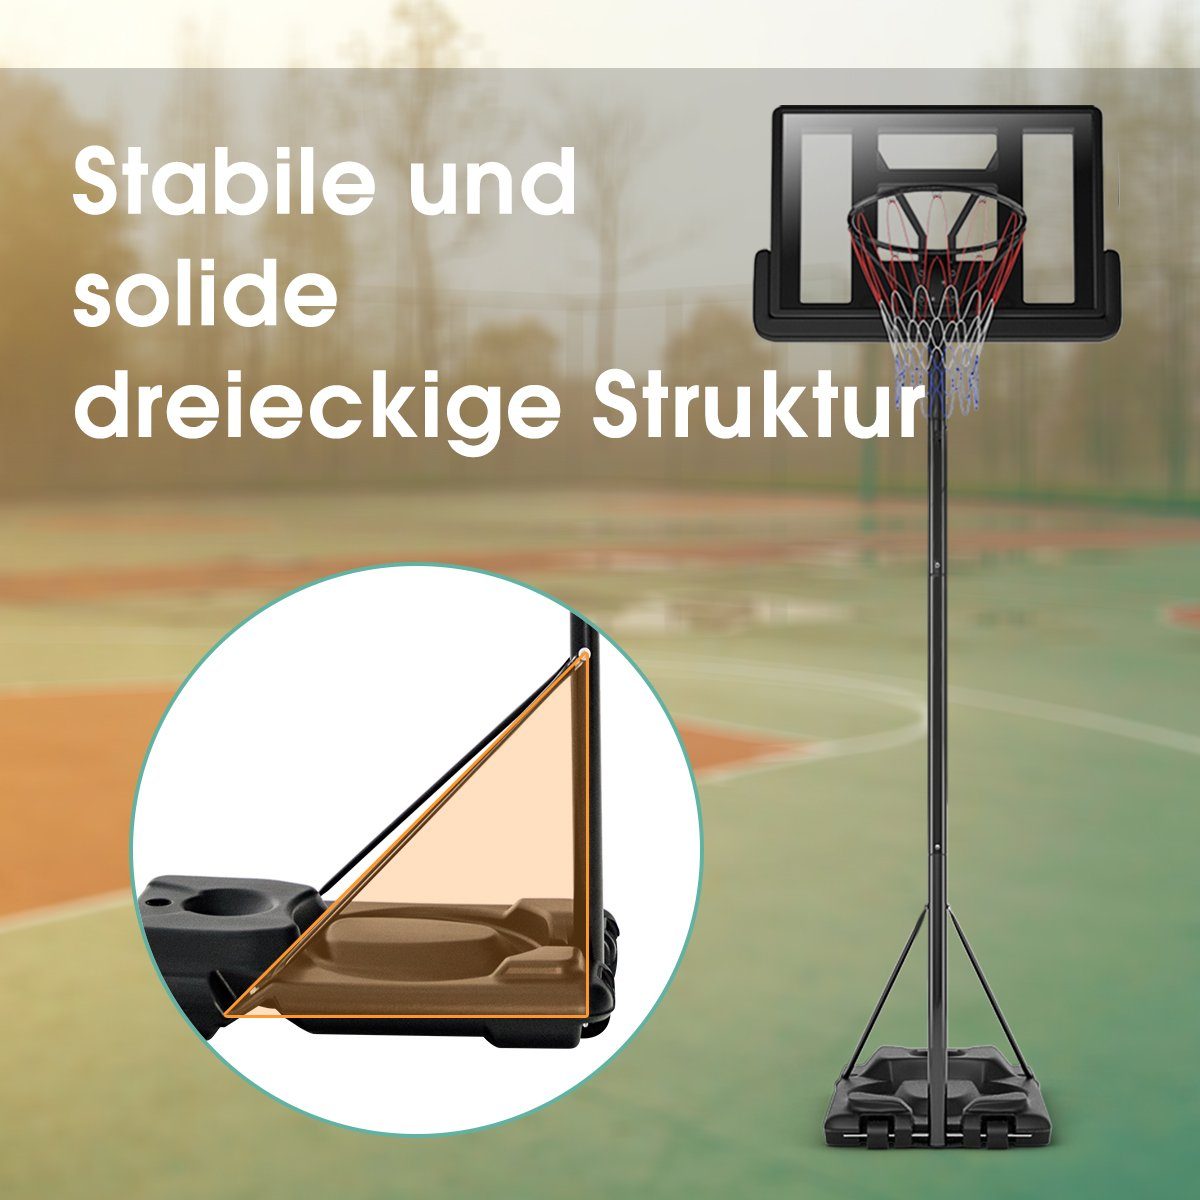 höhenverstellbar Basketballständer, COSTWAY Basketballkorb 260-305cm